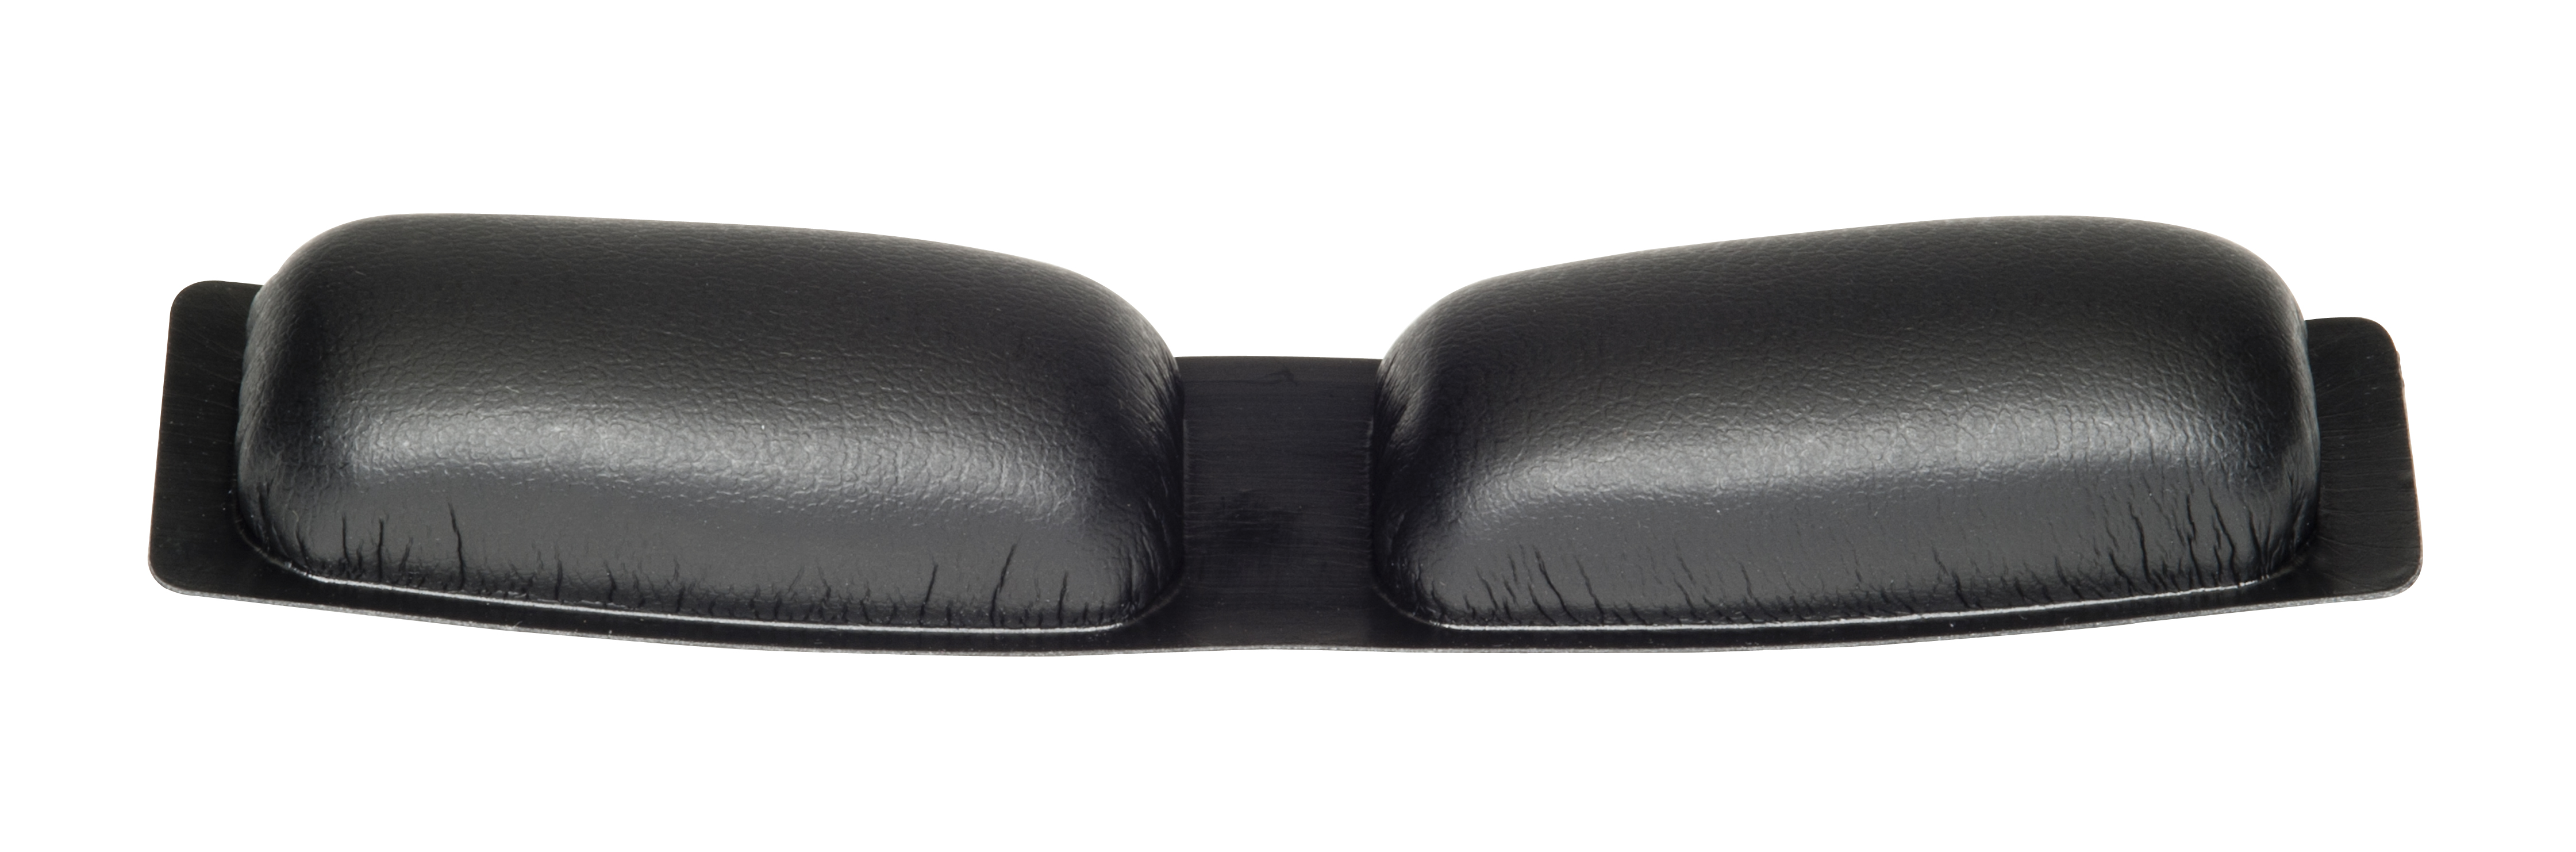 KRK KRK KNS 8400 Replacement Head Cushion